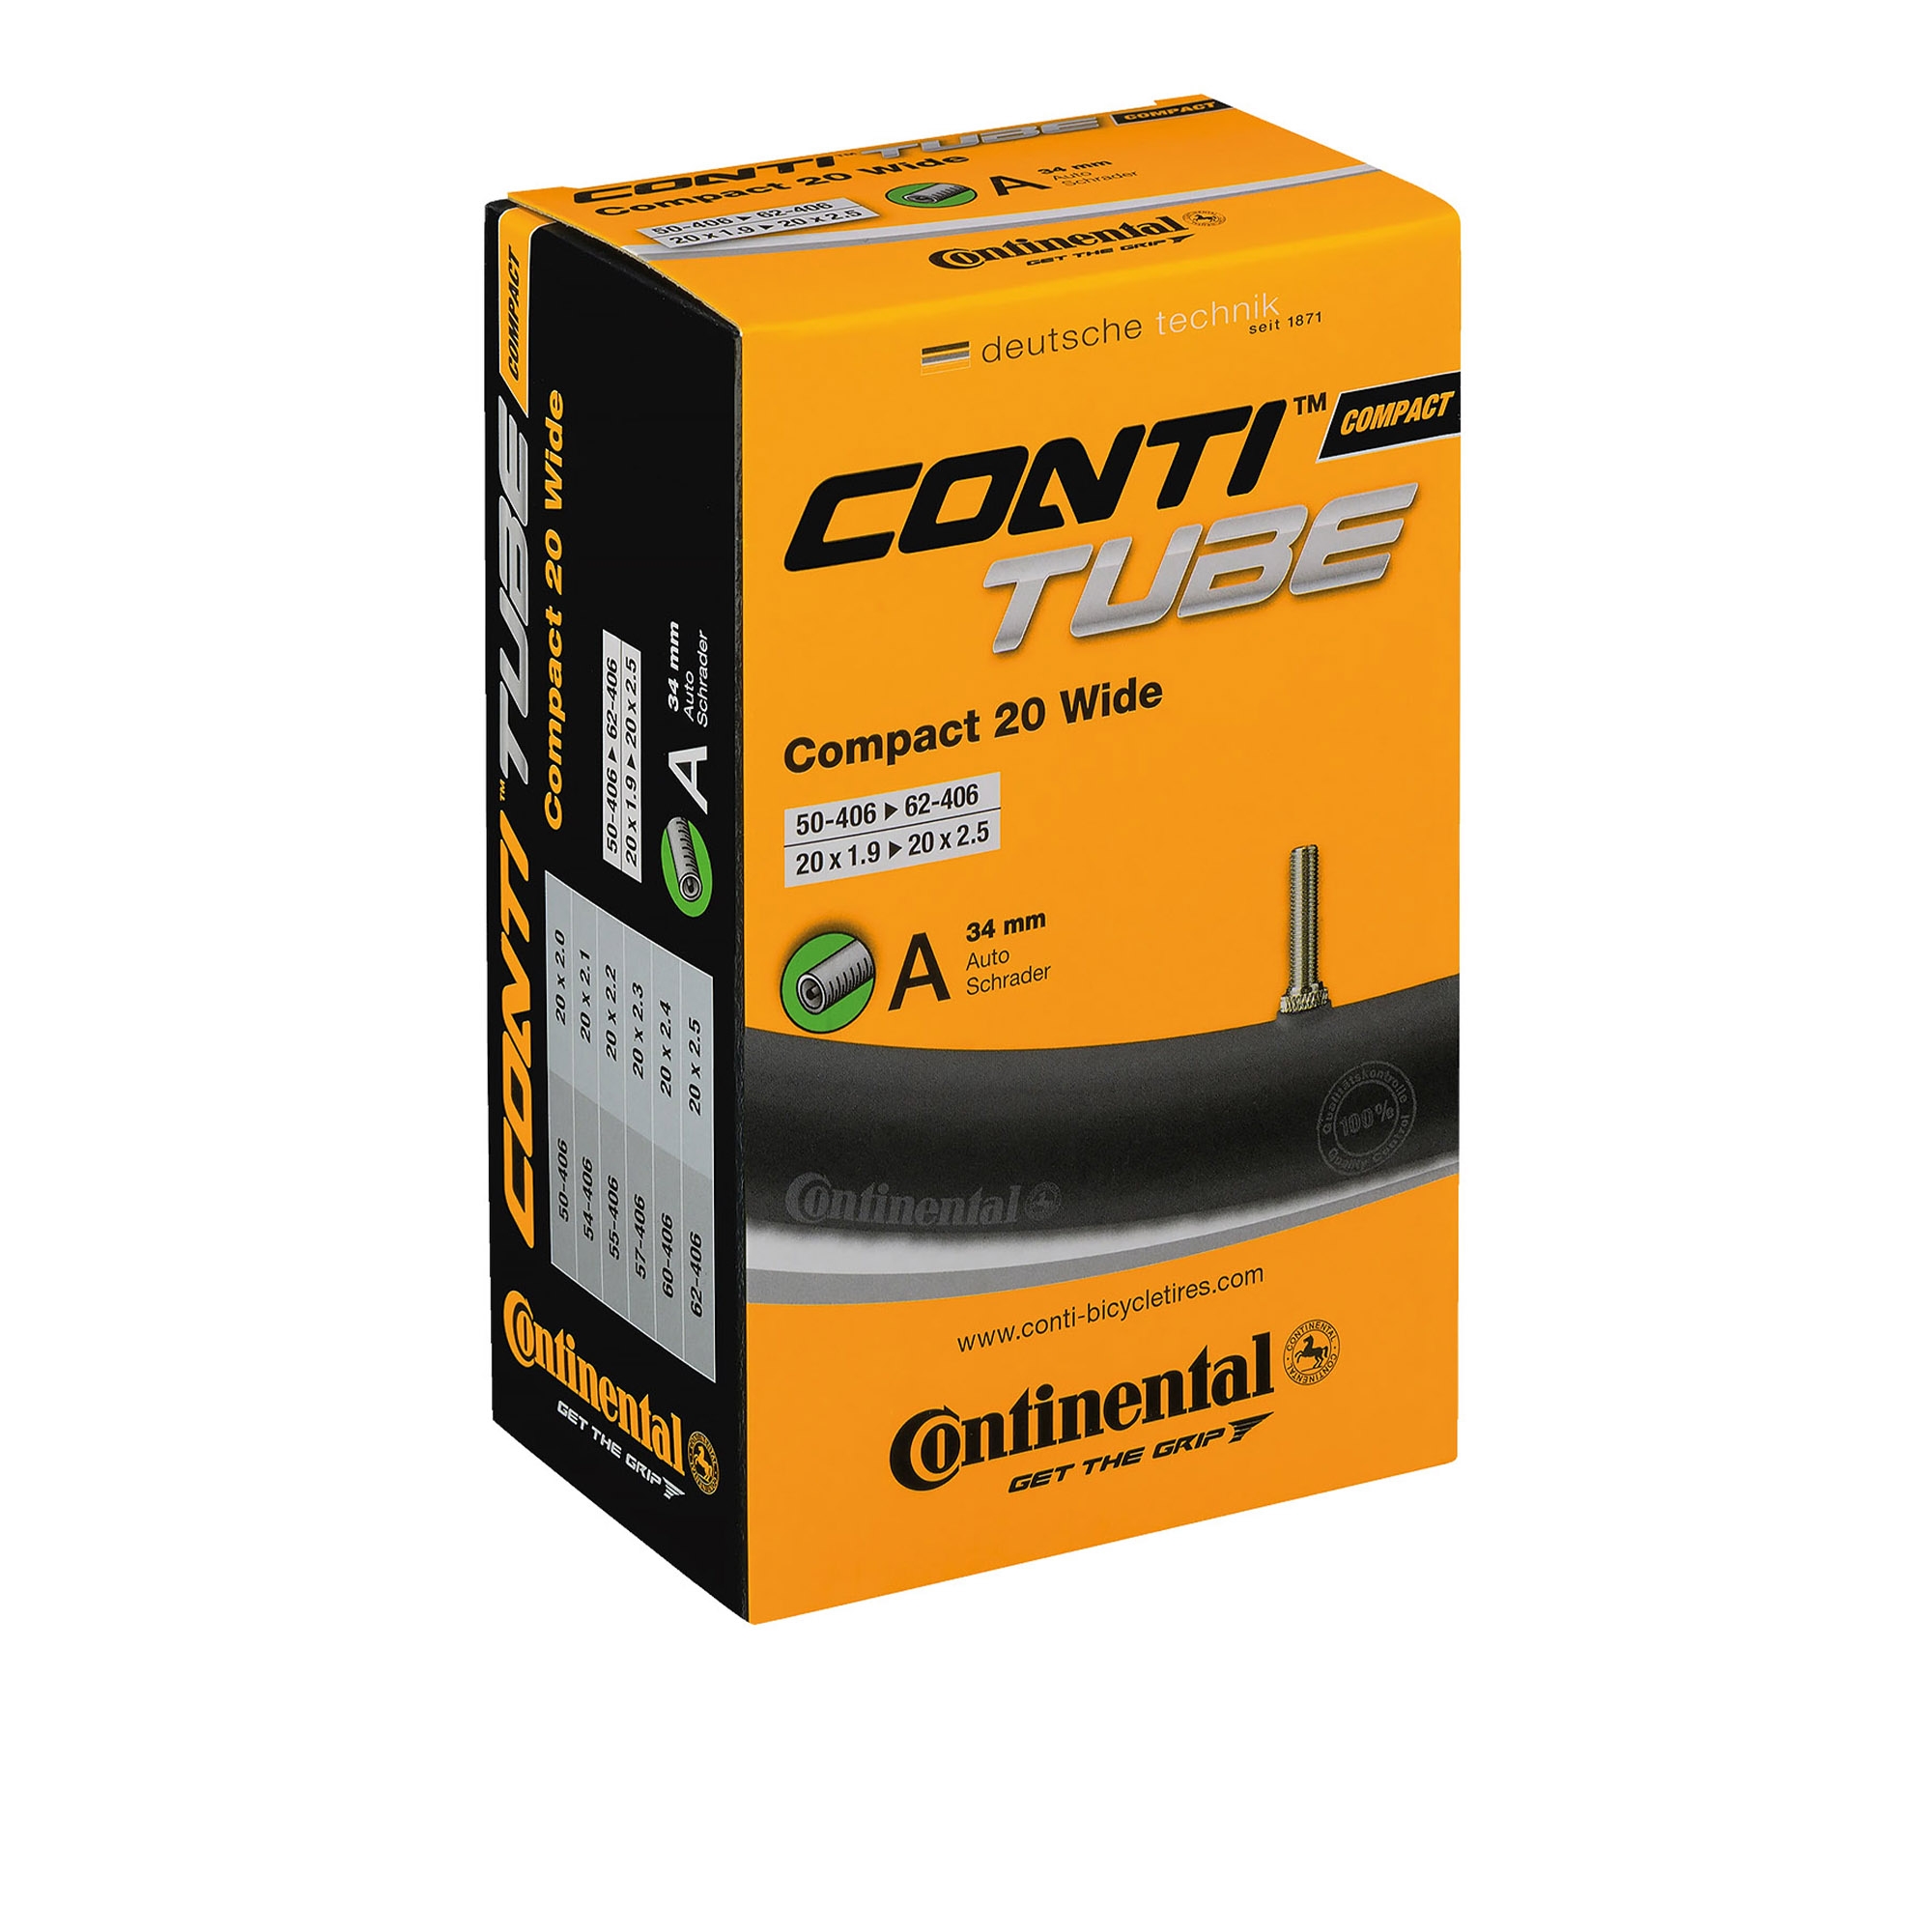 Dętka Conti Compact 20,...